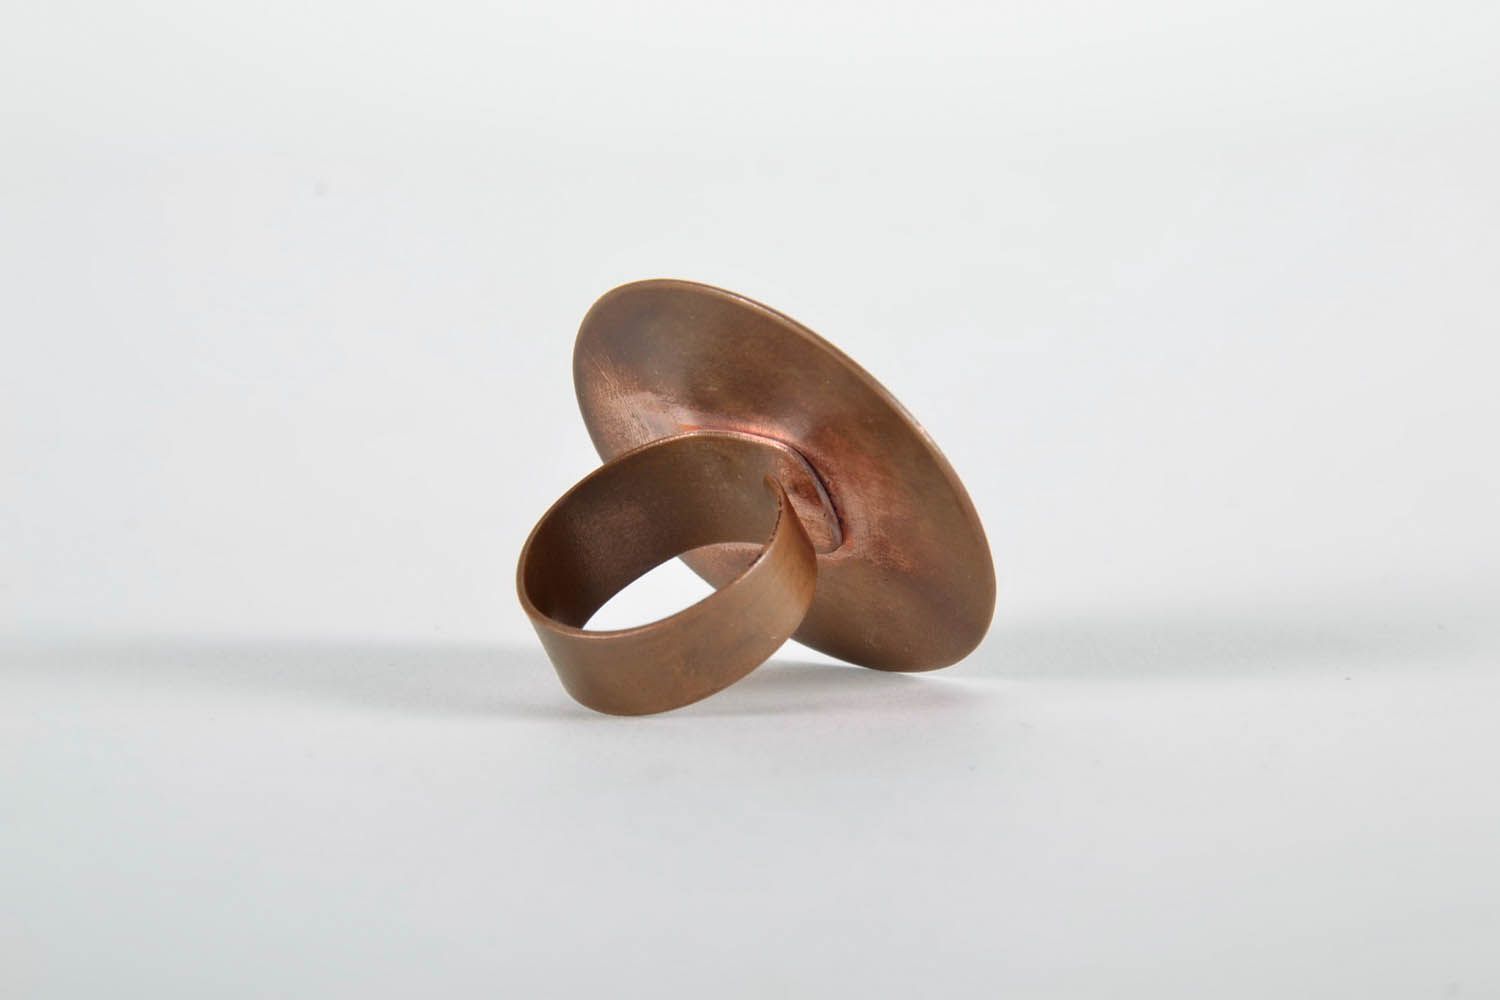 Copper ring photo 4